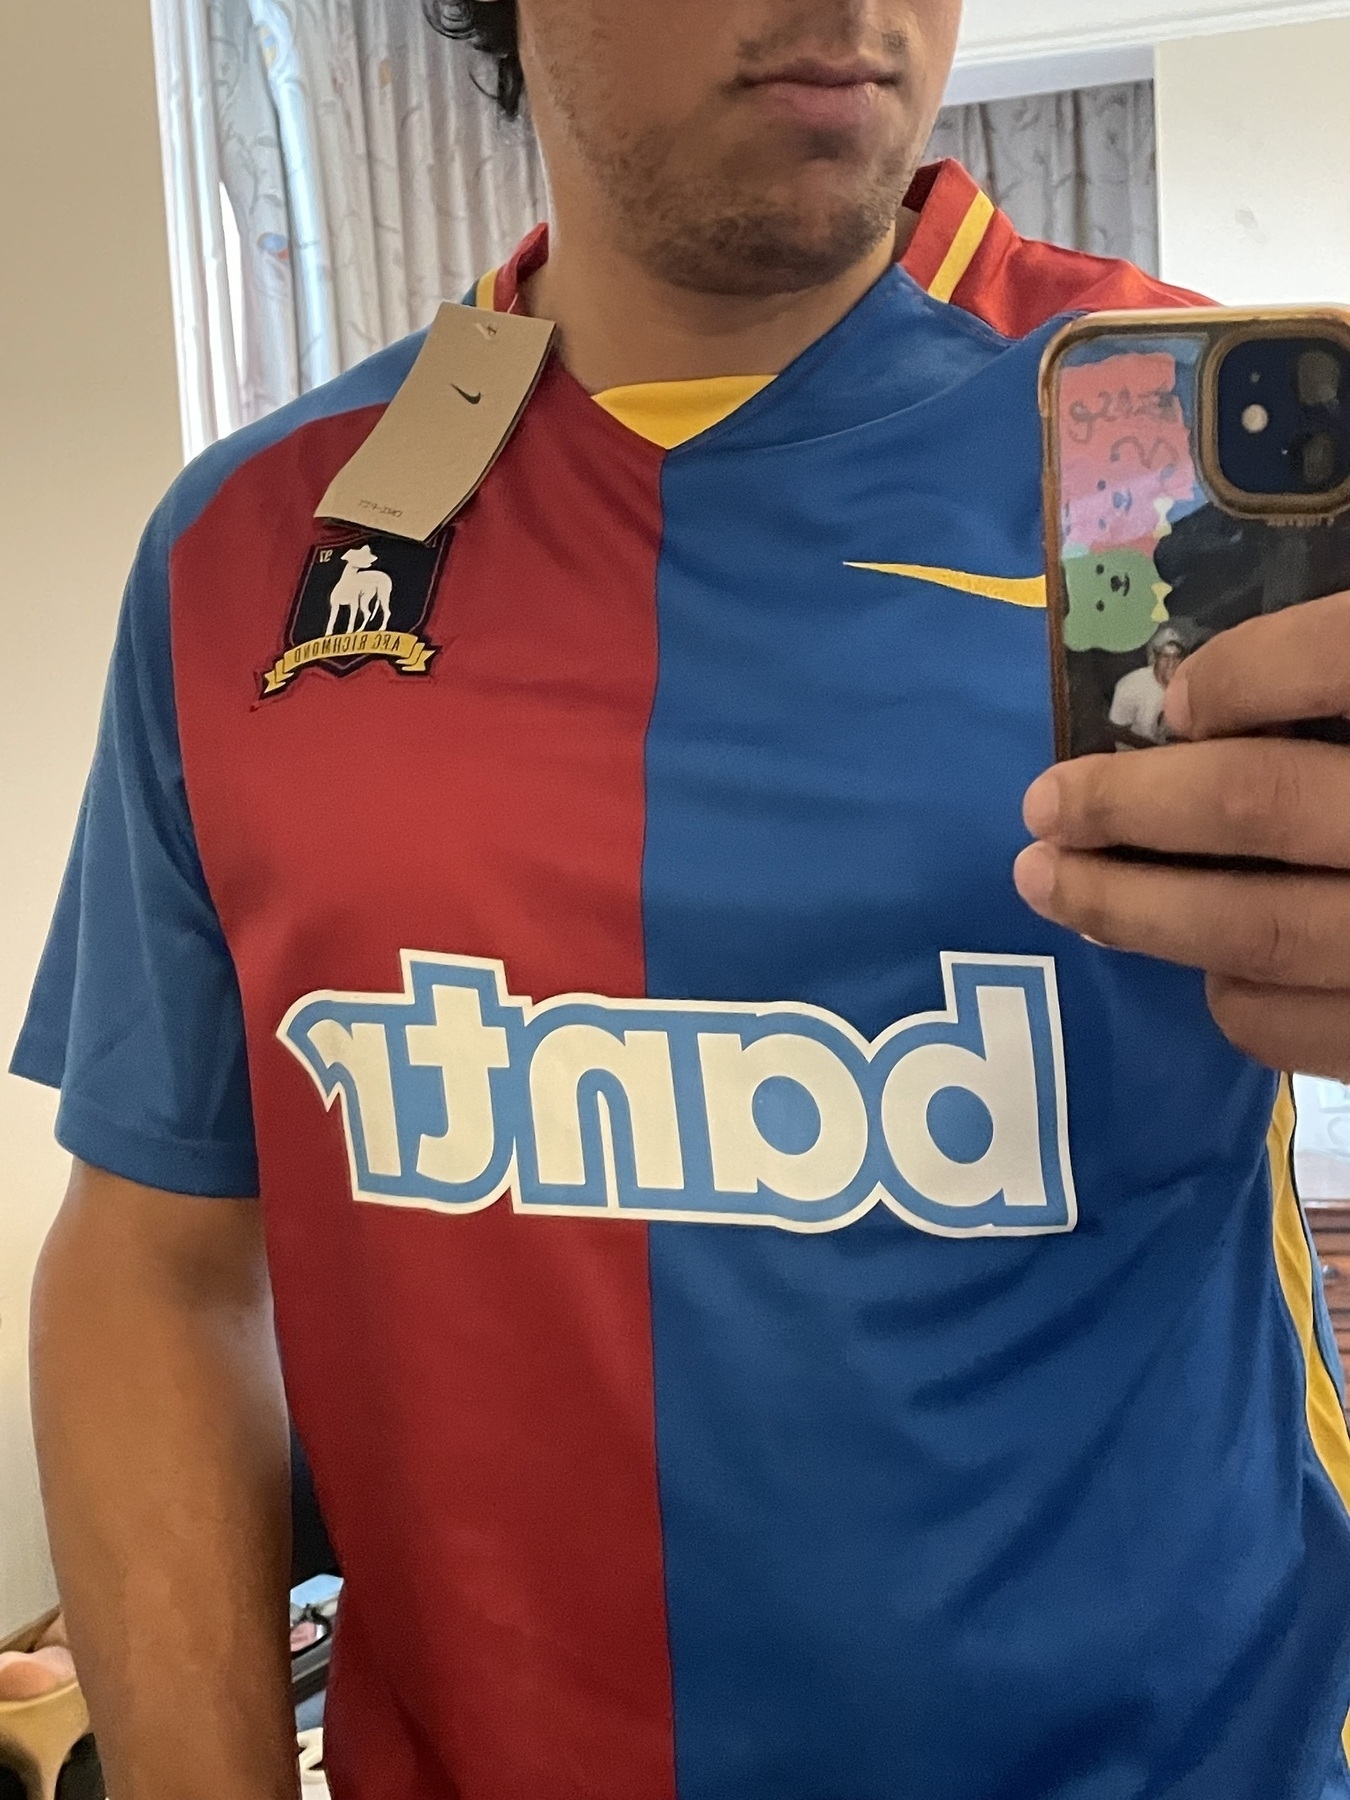 Selfie with AFC Richmond shirt on